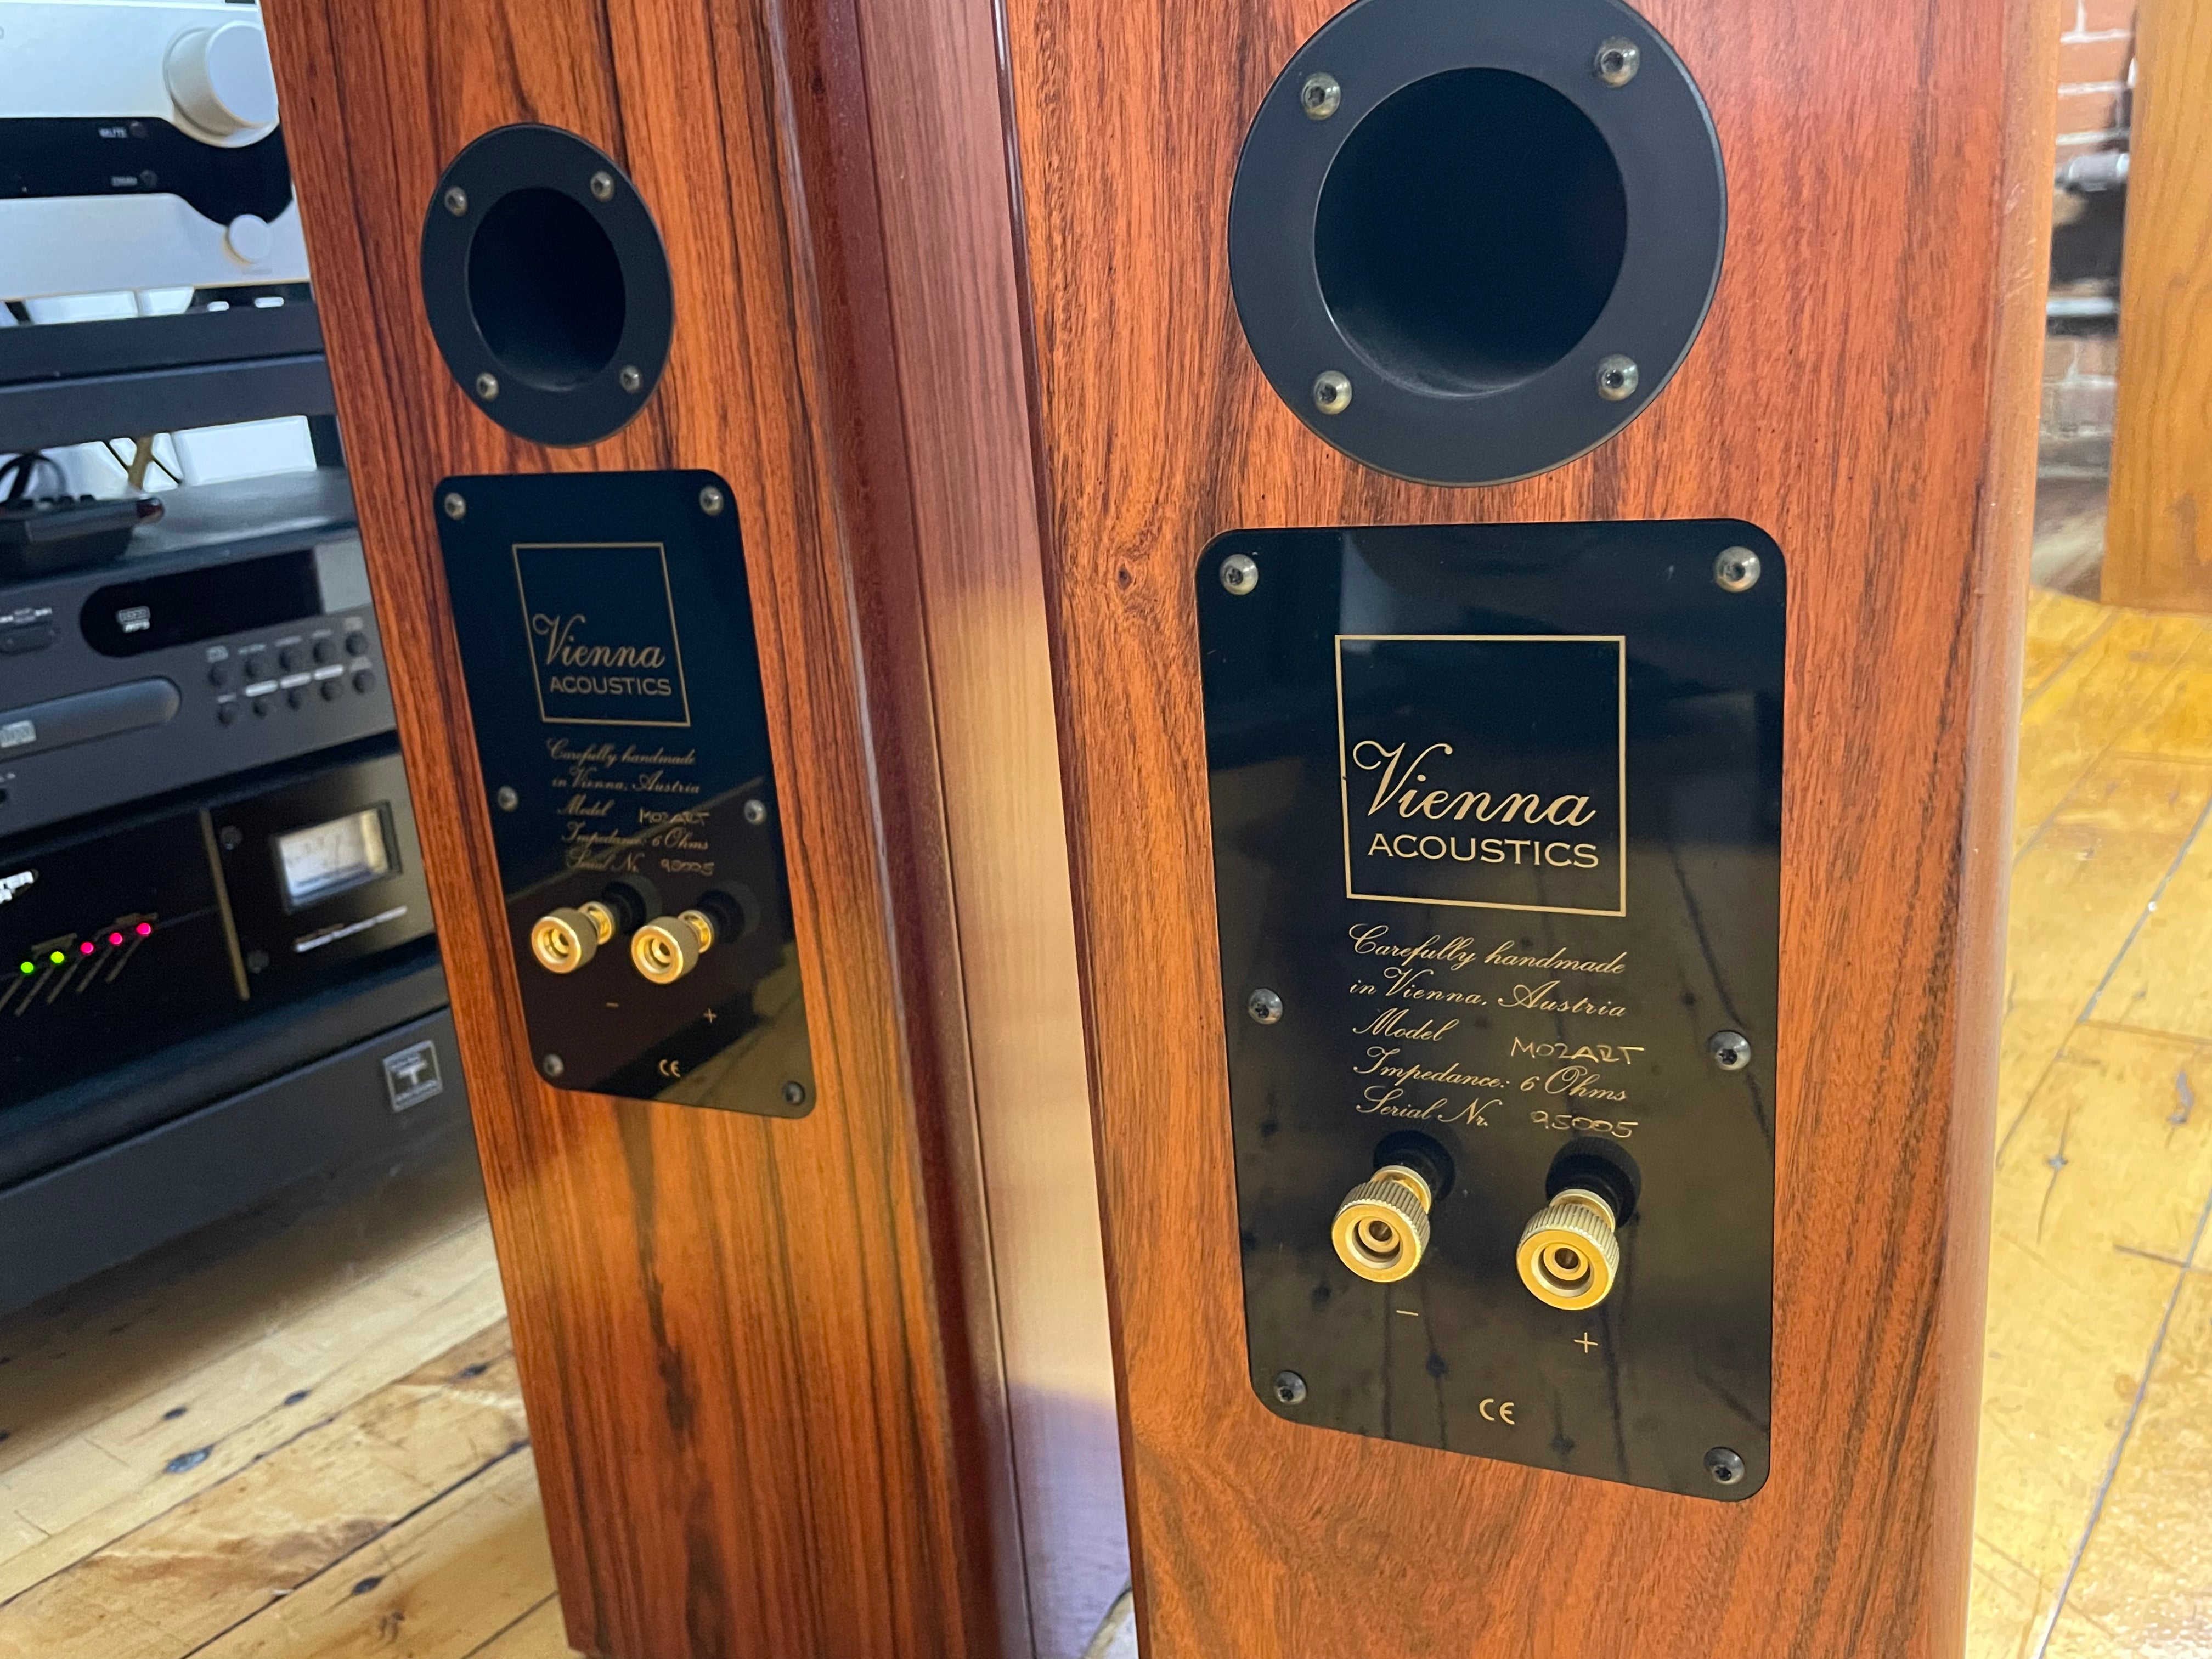 Vienna Acoustics Mozart Tower Speakers